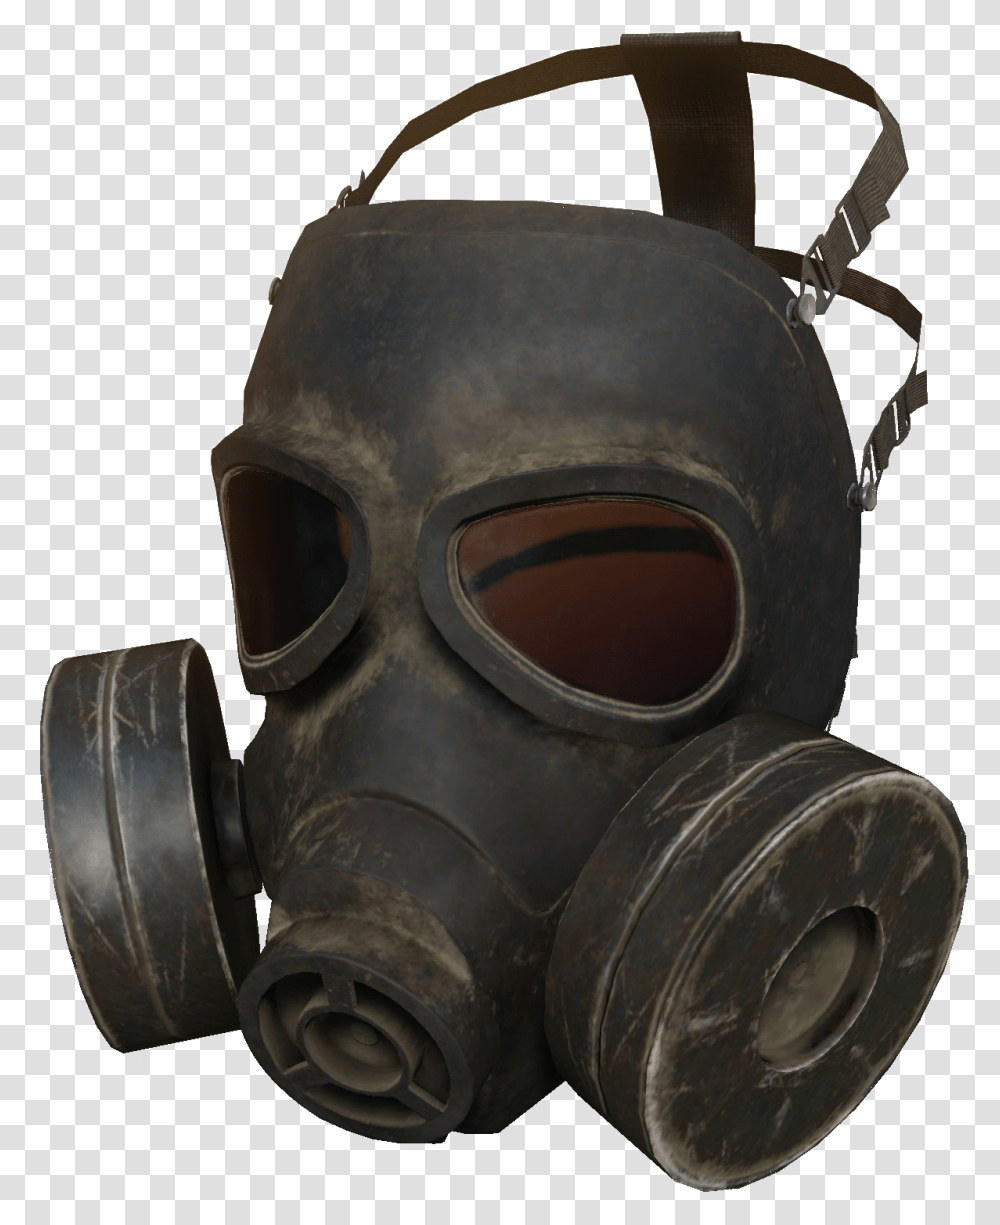 Gas Mask Free Image Download Gas Mask, Helmet, Apparel, Goggles Transparent Png